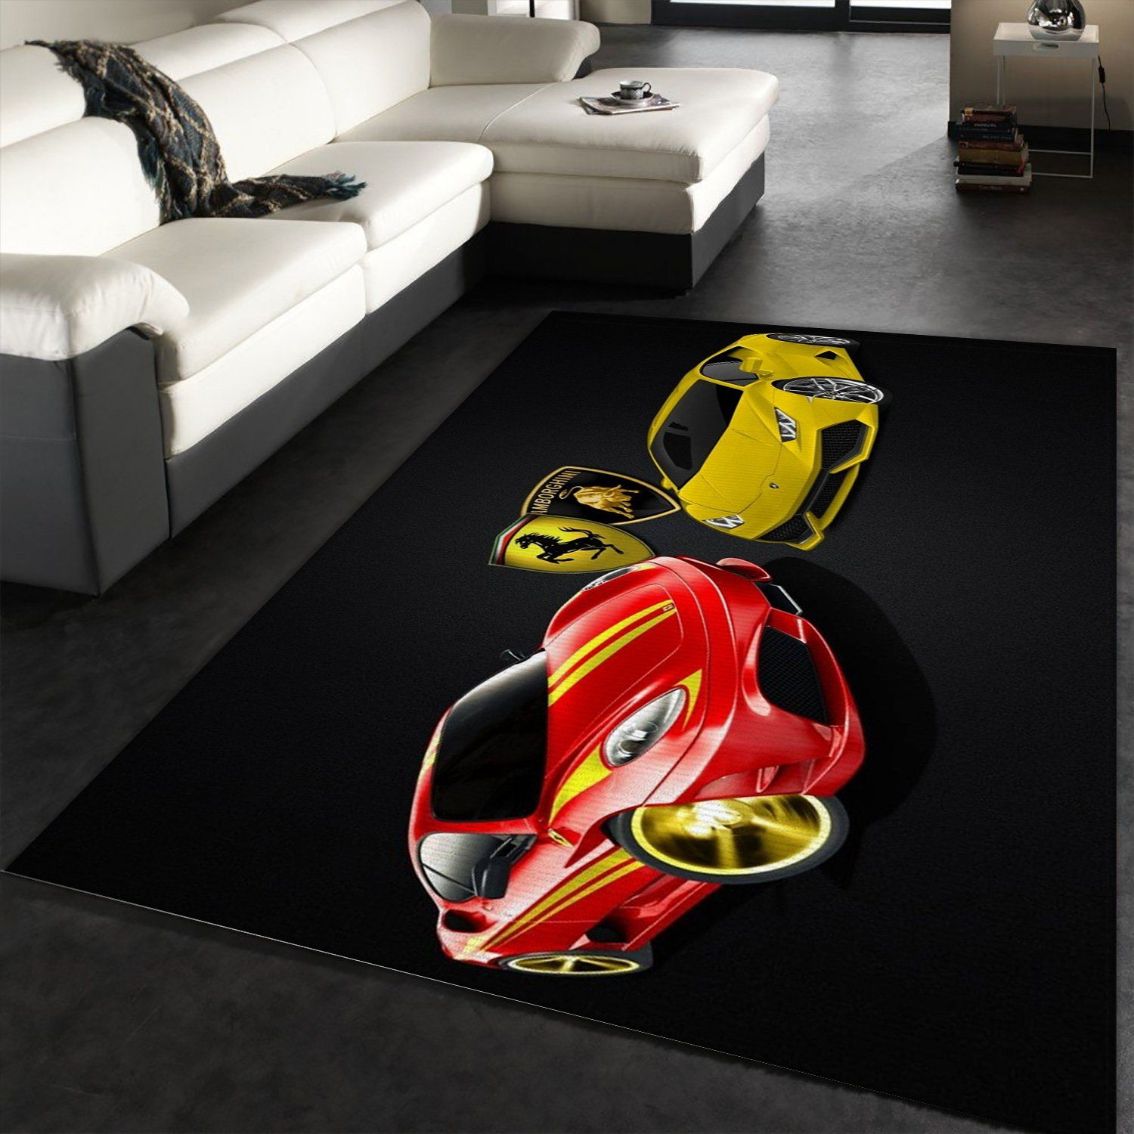 Ferrari Ghini Area Rug Bedroom Floor Decor Home Decor